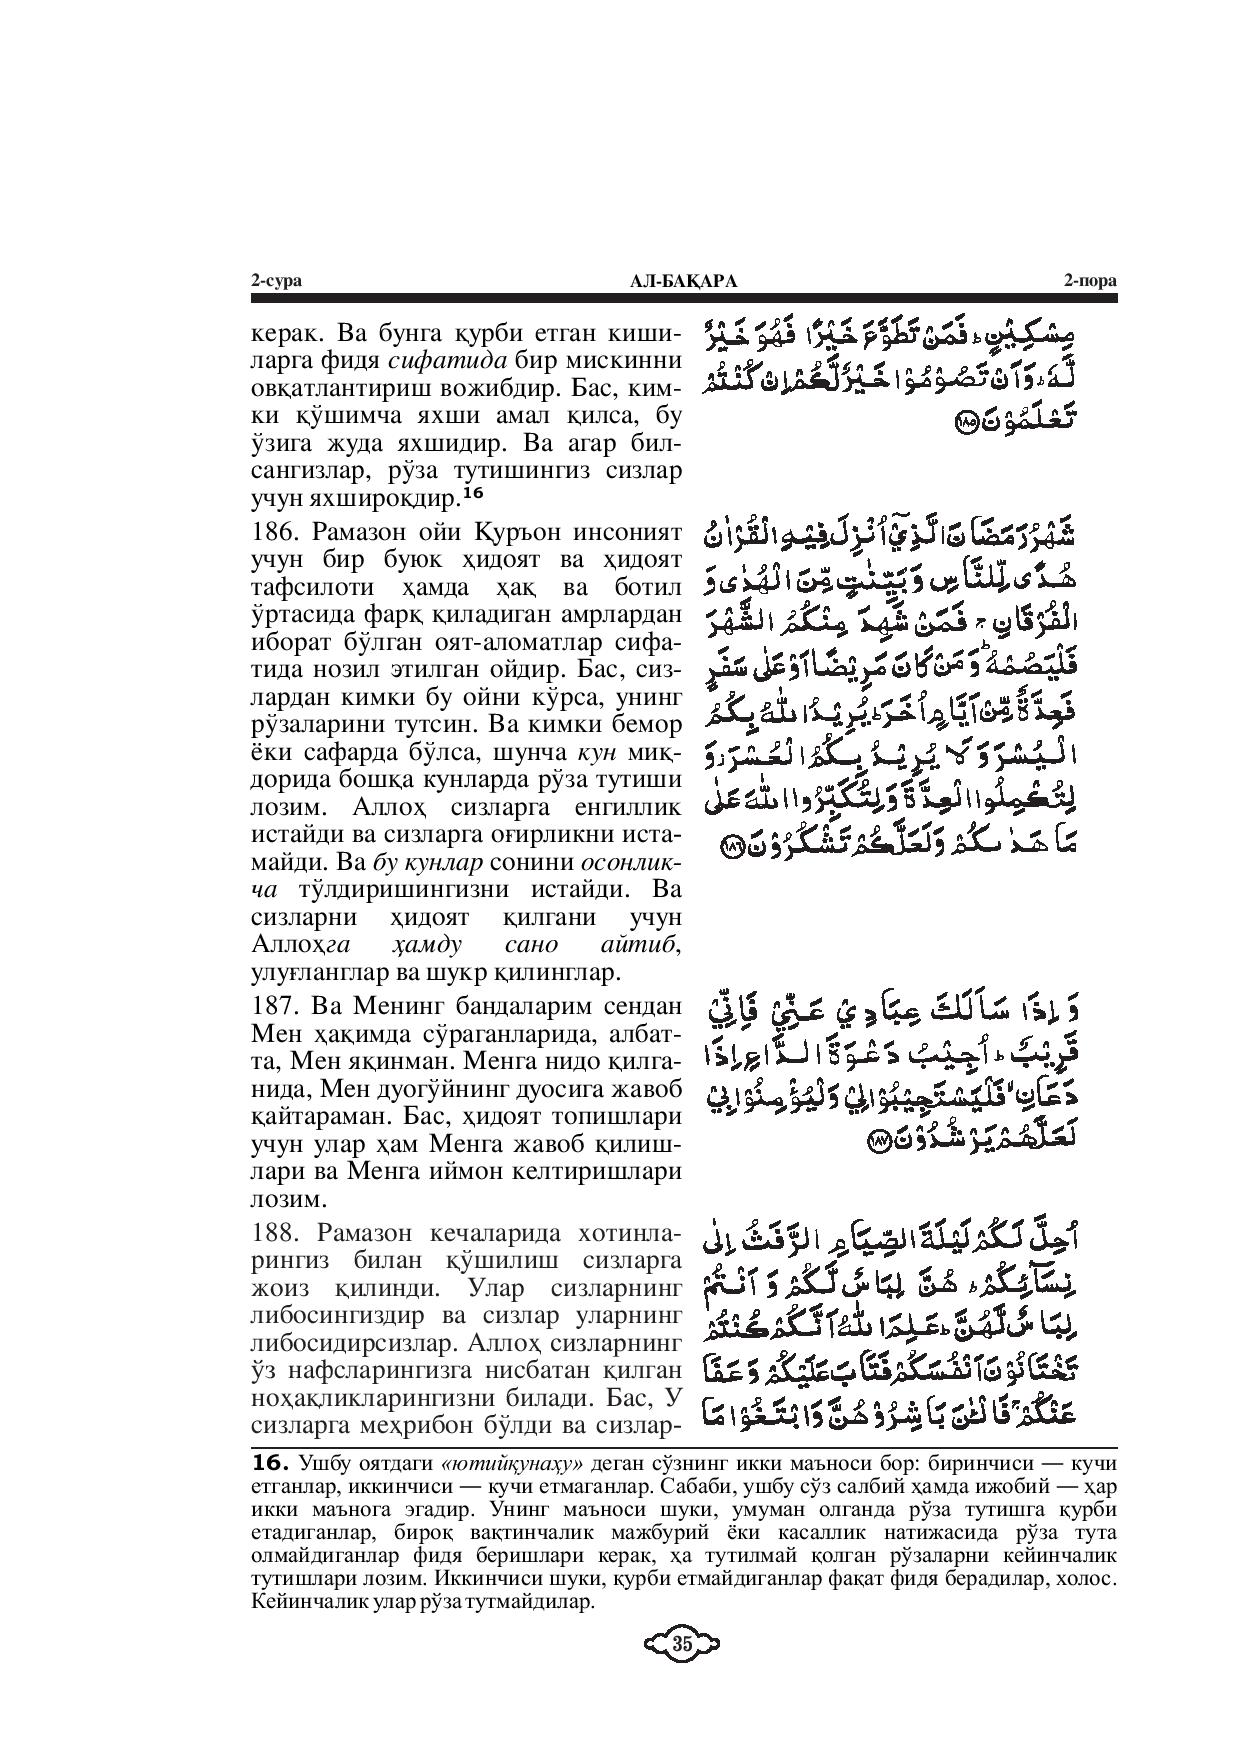 002-al-baqarah-page-033